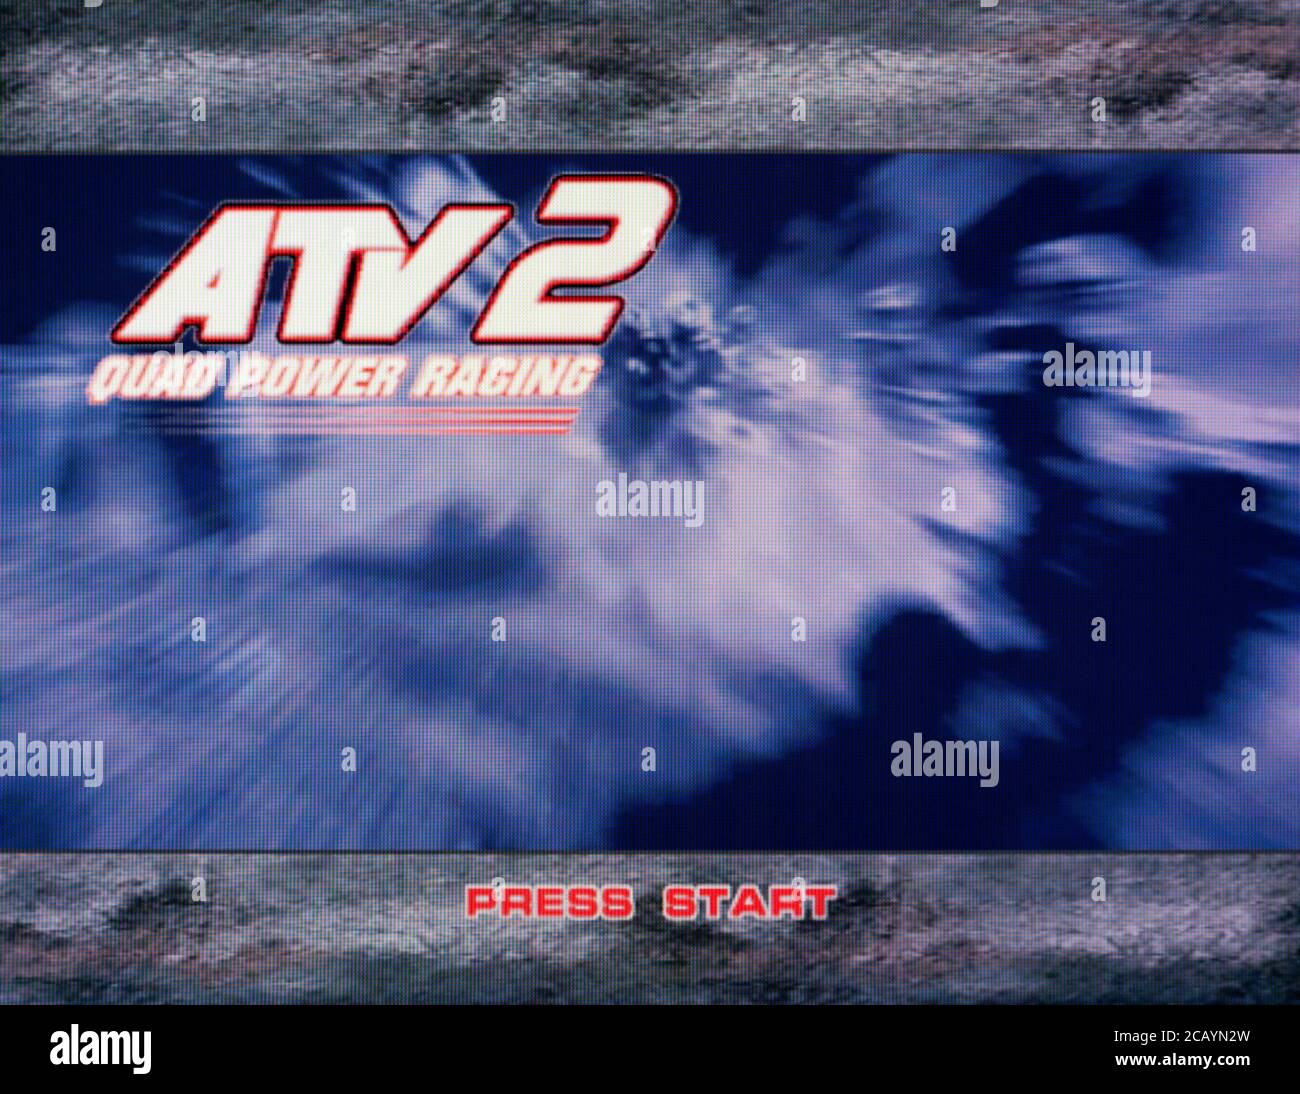 ATV 2 Quad Power Racing - Nintendo Gamecube Videogame - Editorial use only Stock Photo